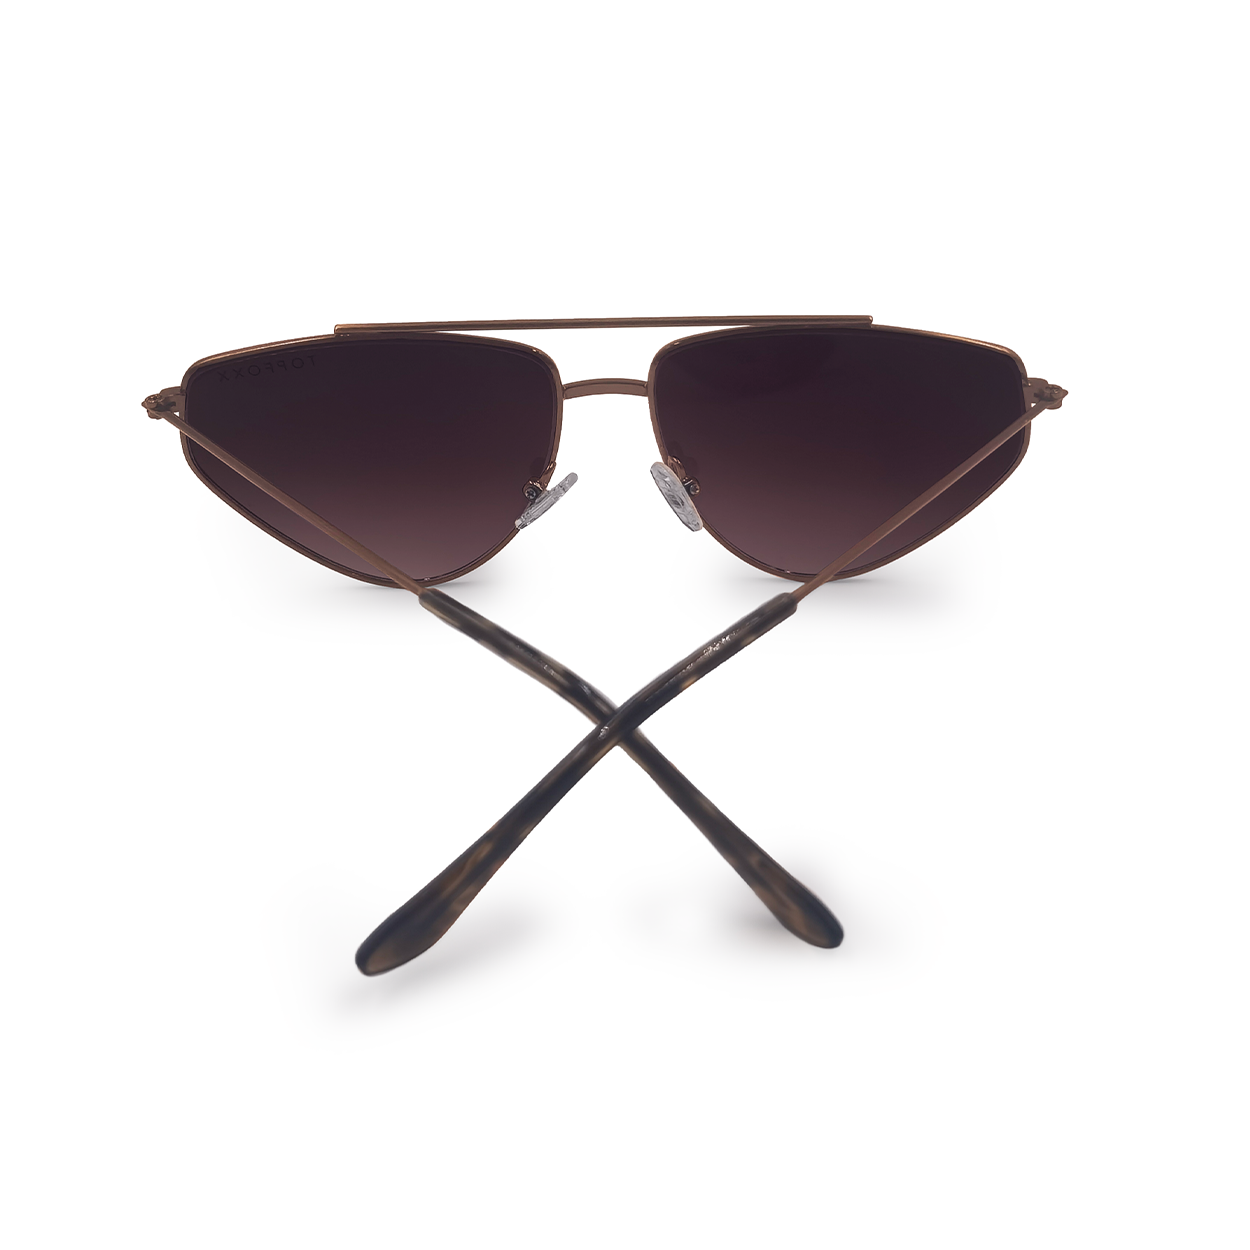 TopFoxx - Hasta La Vista - Dark Purple Cat-Eye Aviator Sunglasses for Women - Unique Aviators - Back Profile